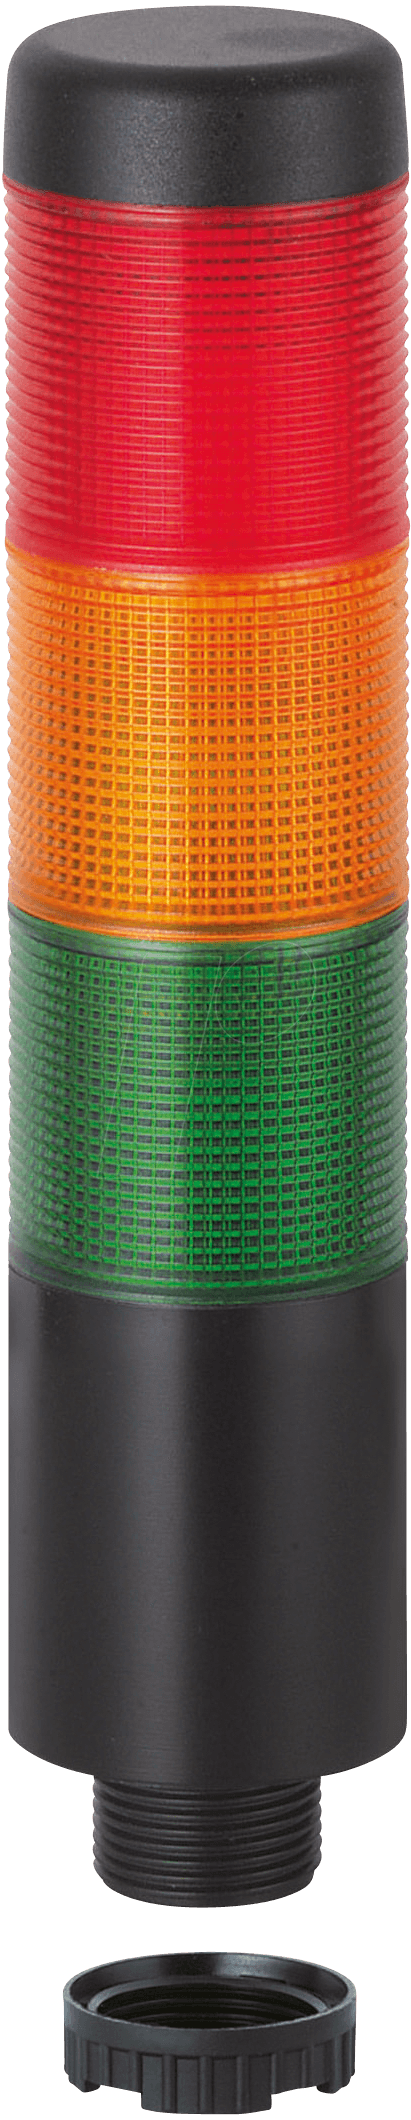 WERMA 699 110 75 - LED-Säule, gn/ge/rt, Kab, Sum, 24 V AC/DC von WERMA SIGNALTECHNIK